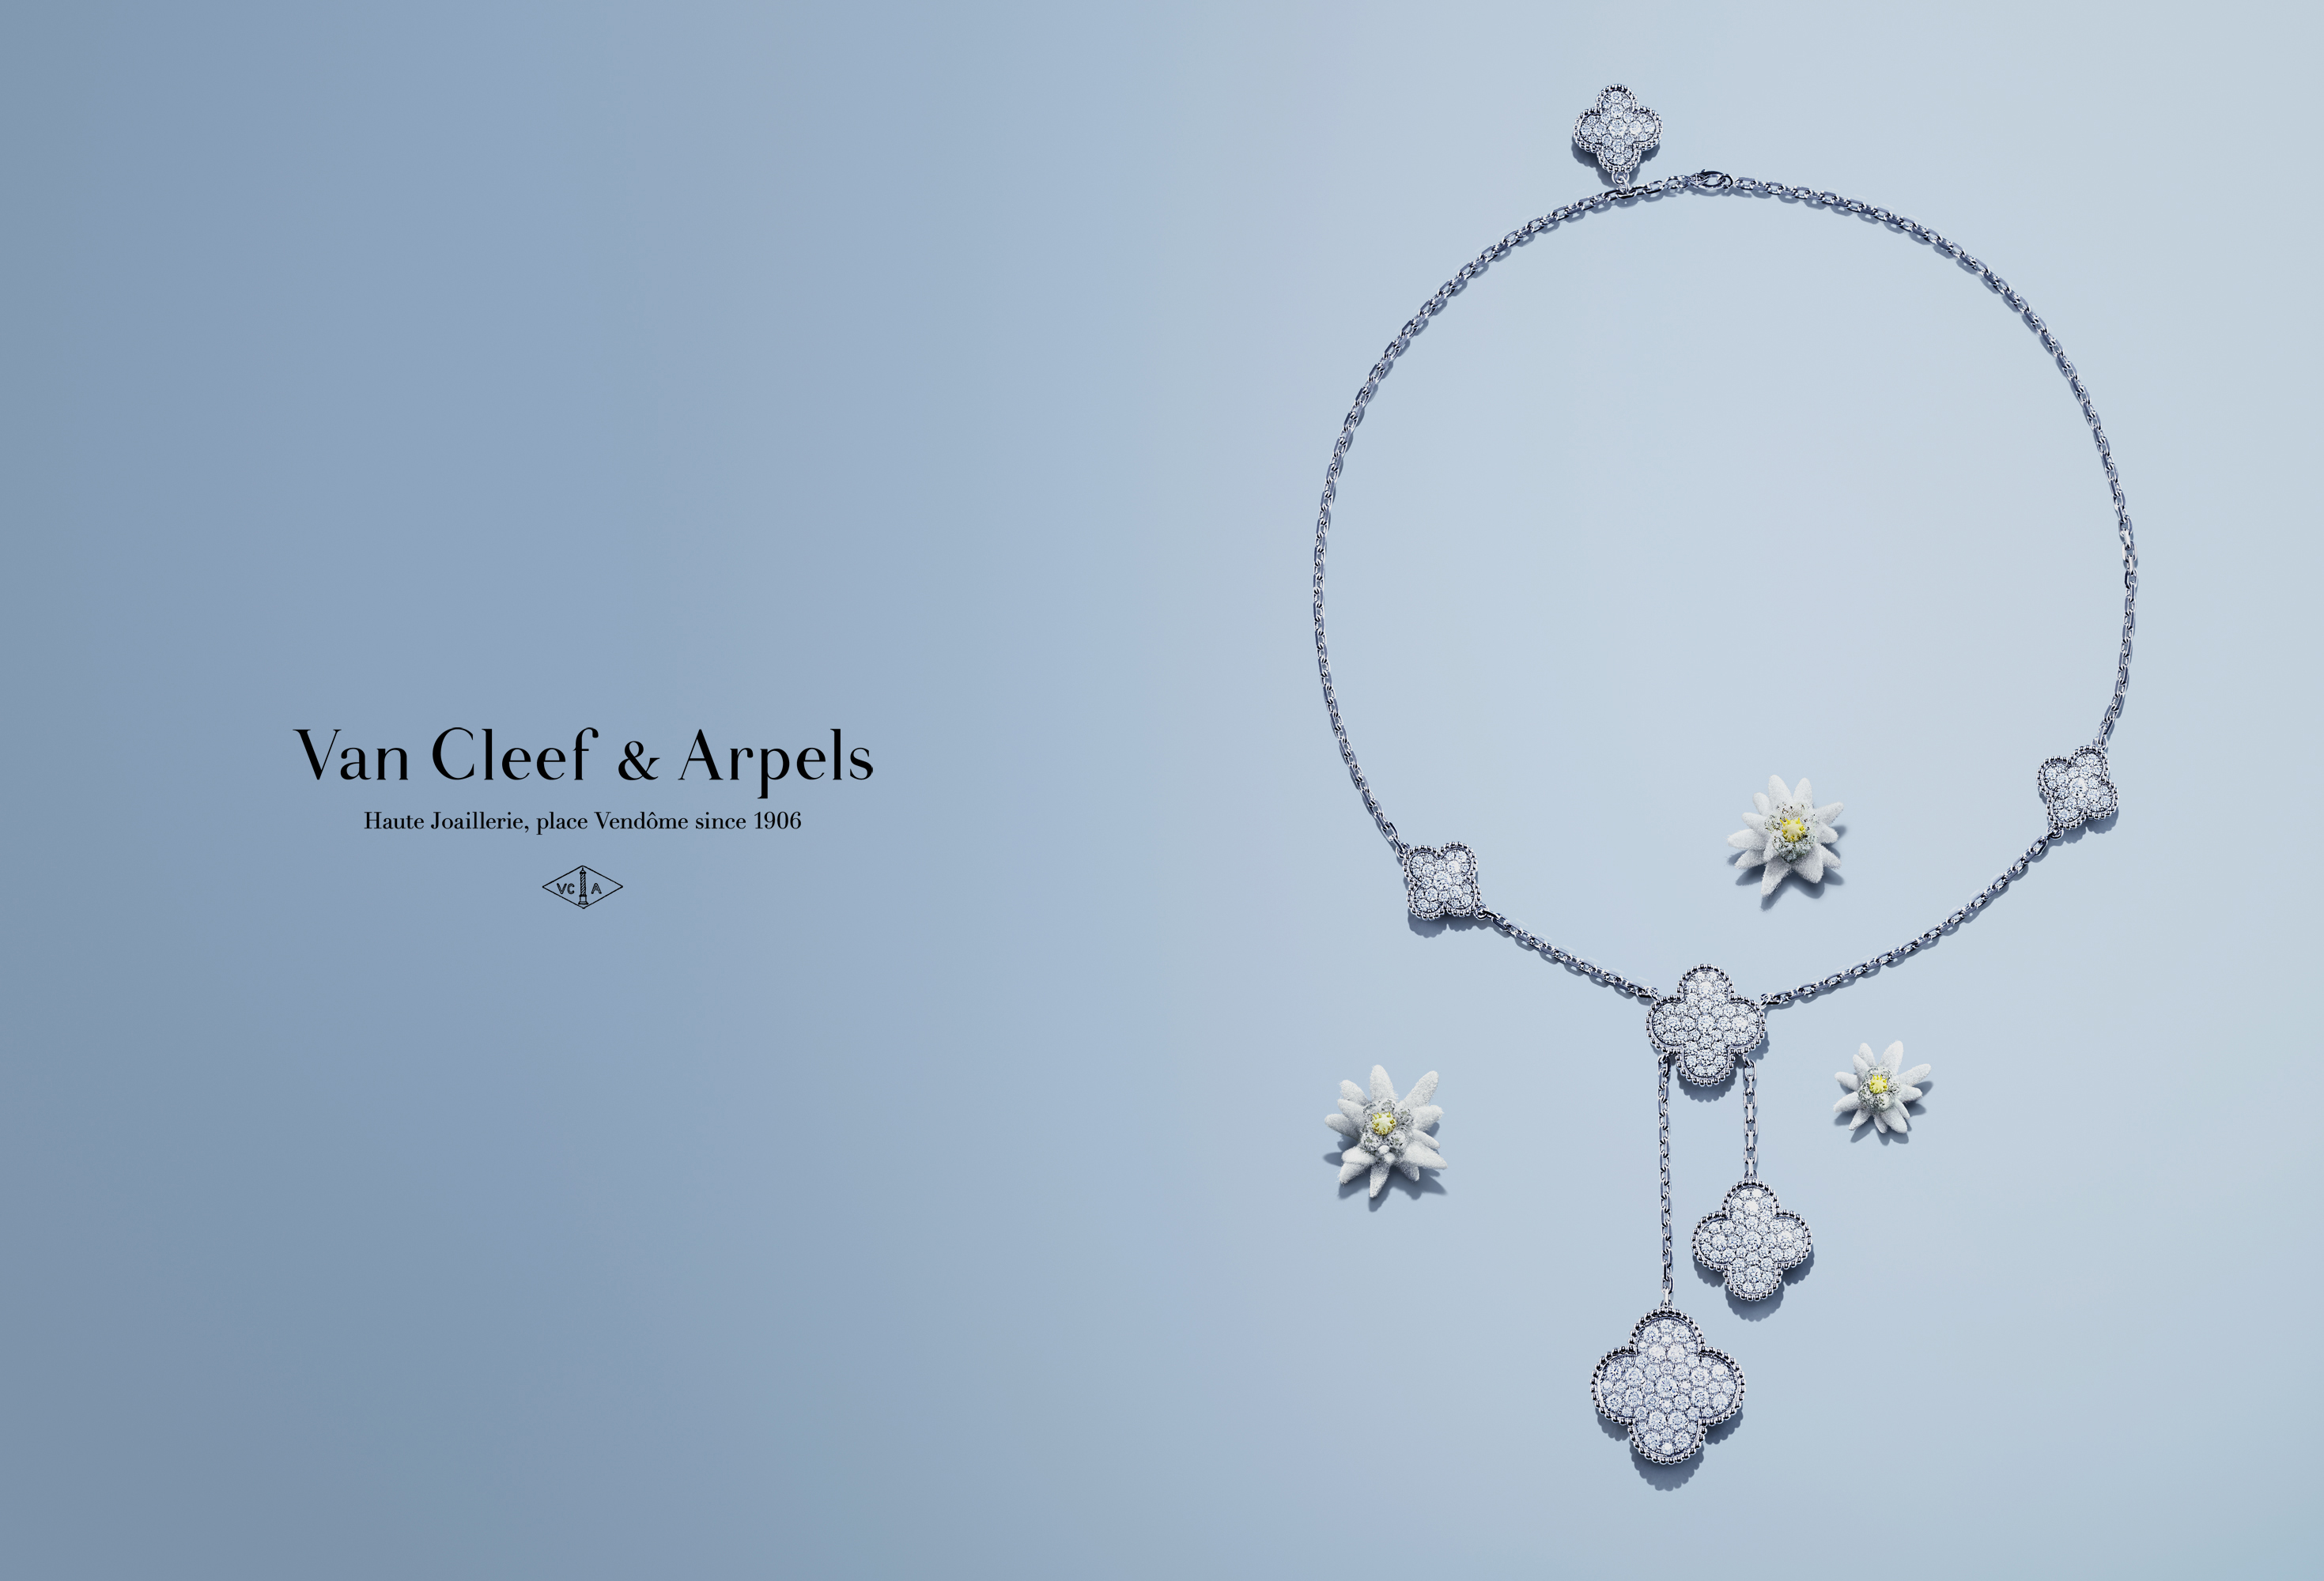 Фан клиф. Van Cleef & Arpels: бренд,. Бижутерия van Cleef & Arpels реклама. Van Cleef Arpels одежда. Van Cleef Arpels логотип бренда.